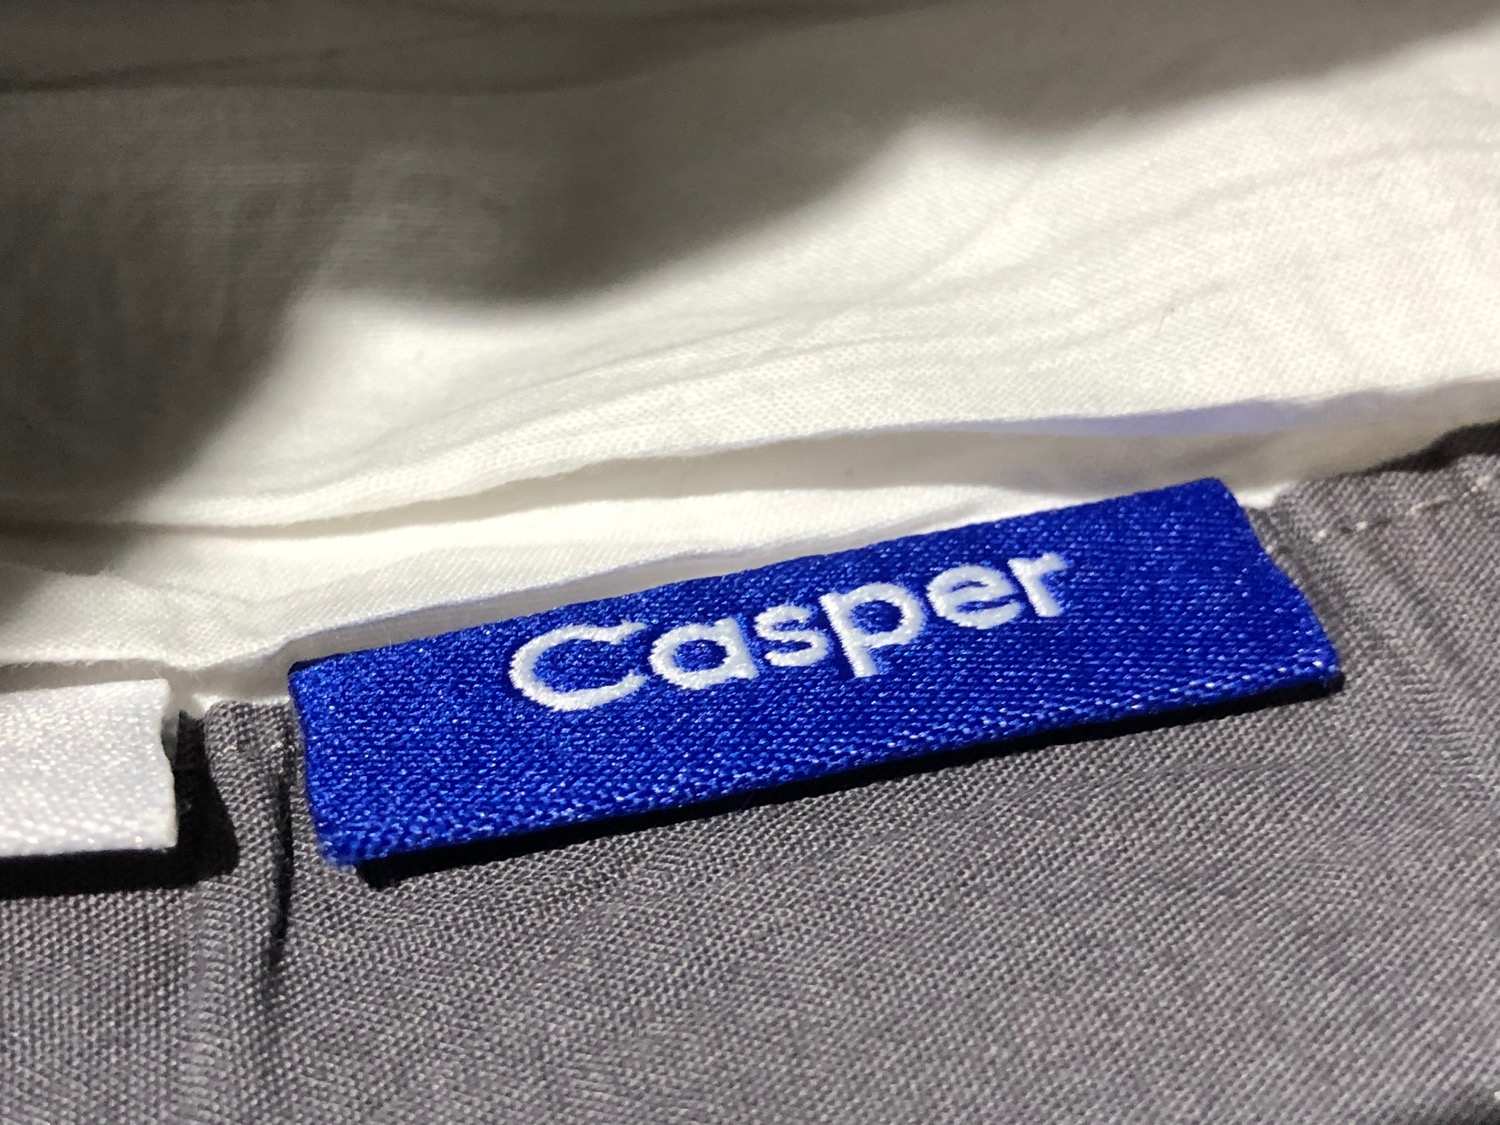 a blue label on a white shirt